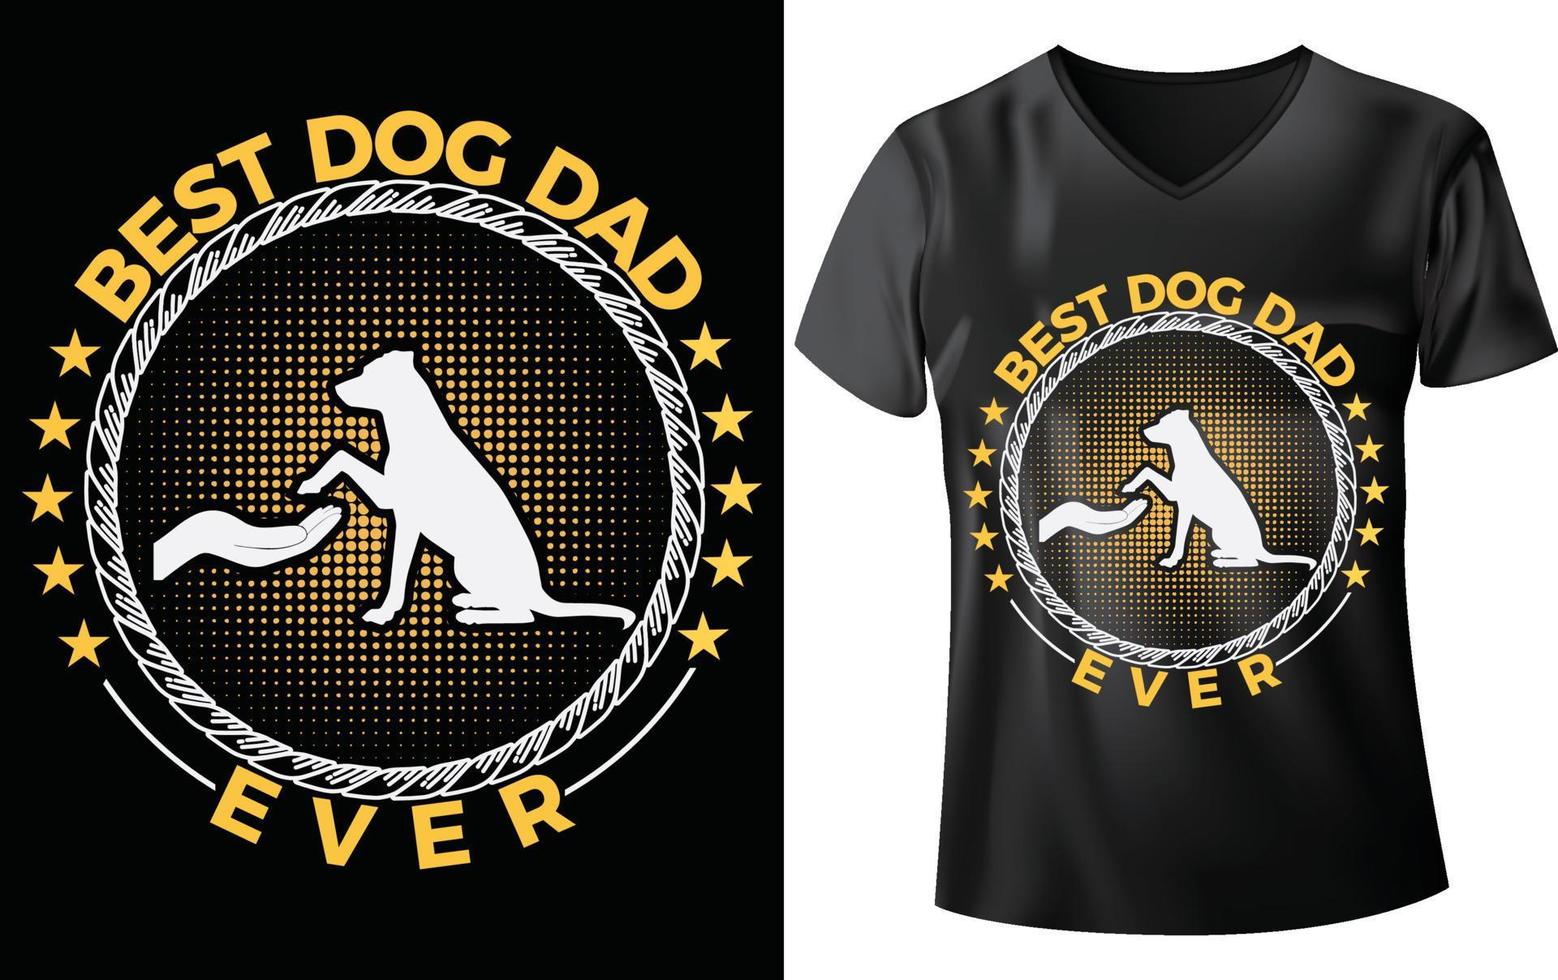 hund t-shirt design vektor